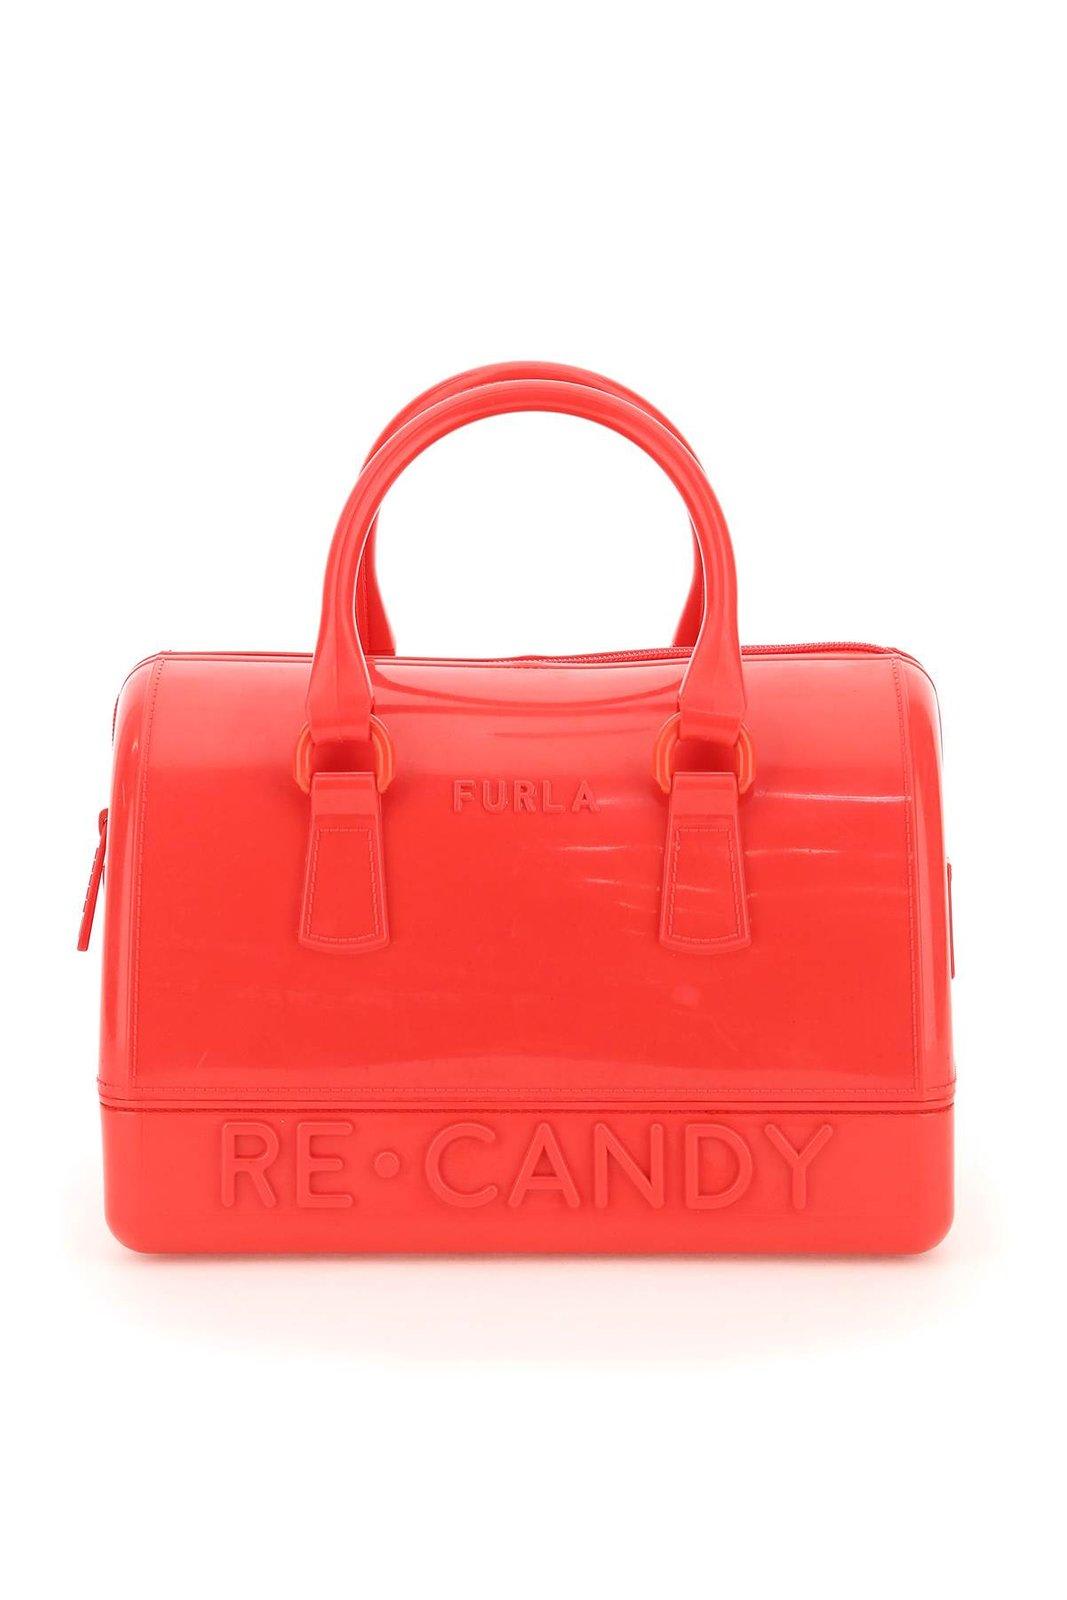 Furla Candy Logo Embossed Tote Bag